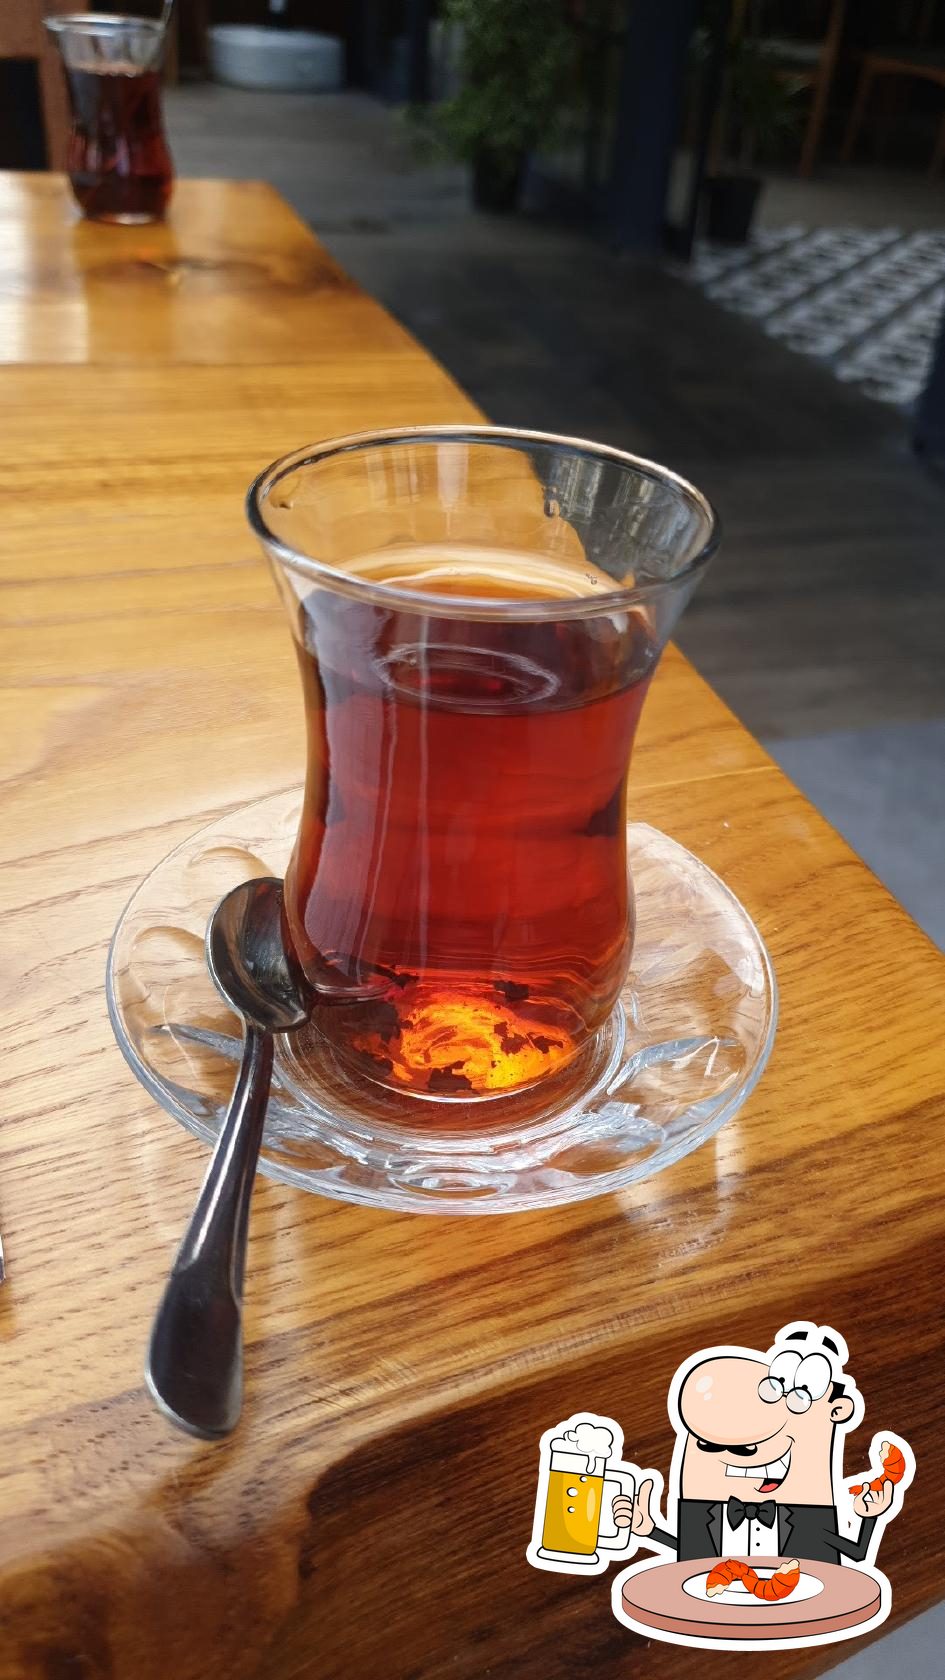 pacaci esat usta cadde 75 diyarbakir restaurant reviews